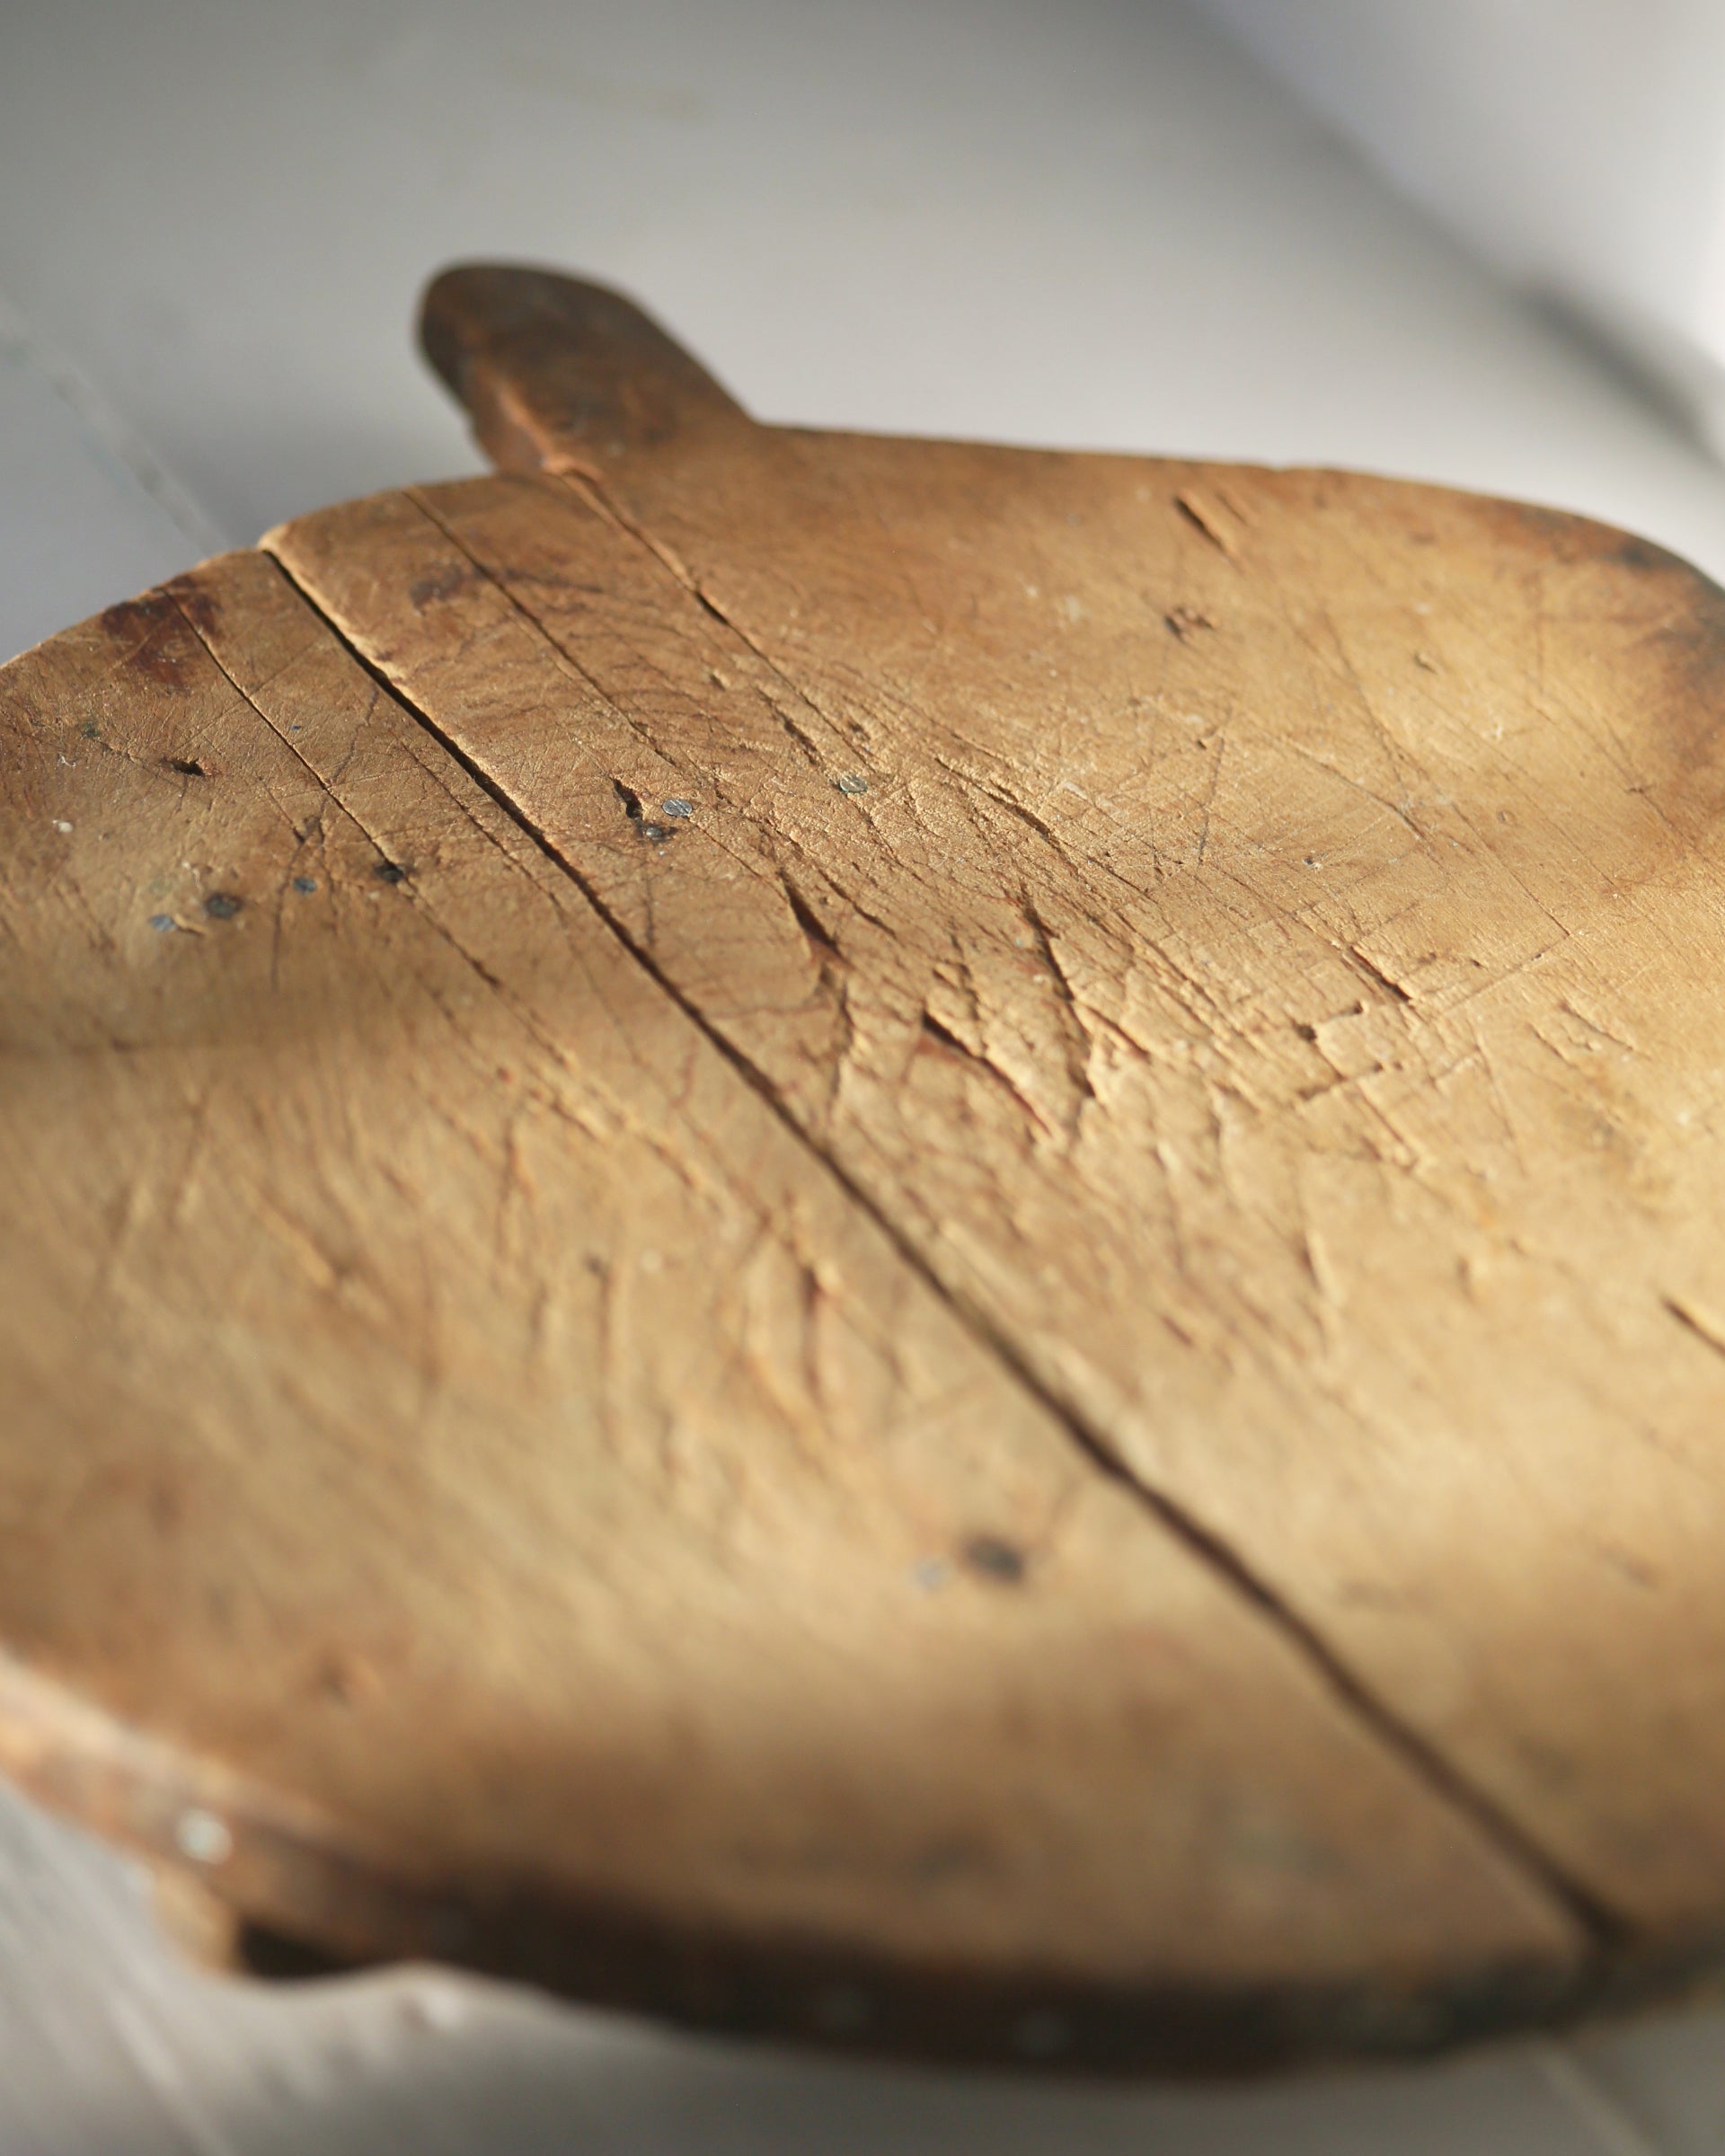 Repair detail of cracked wooden board